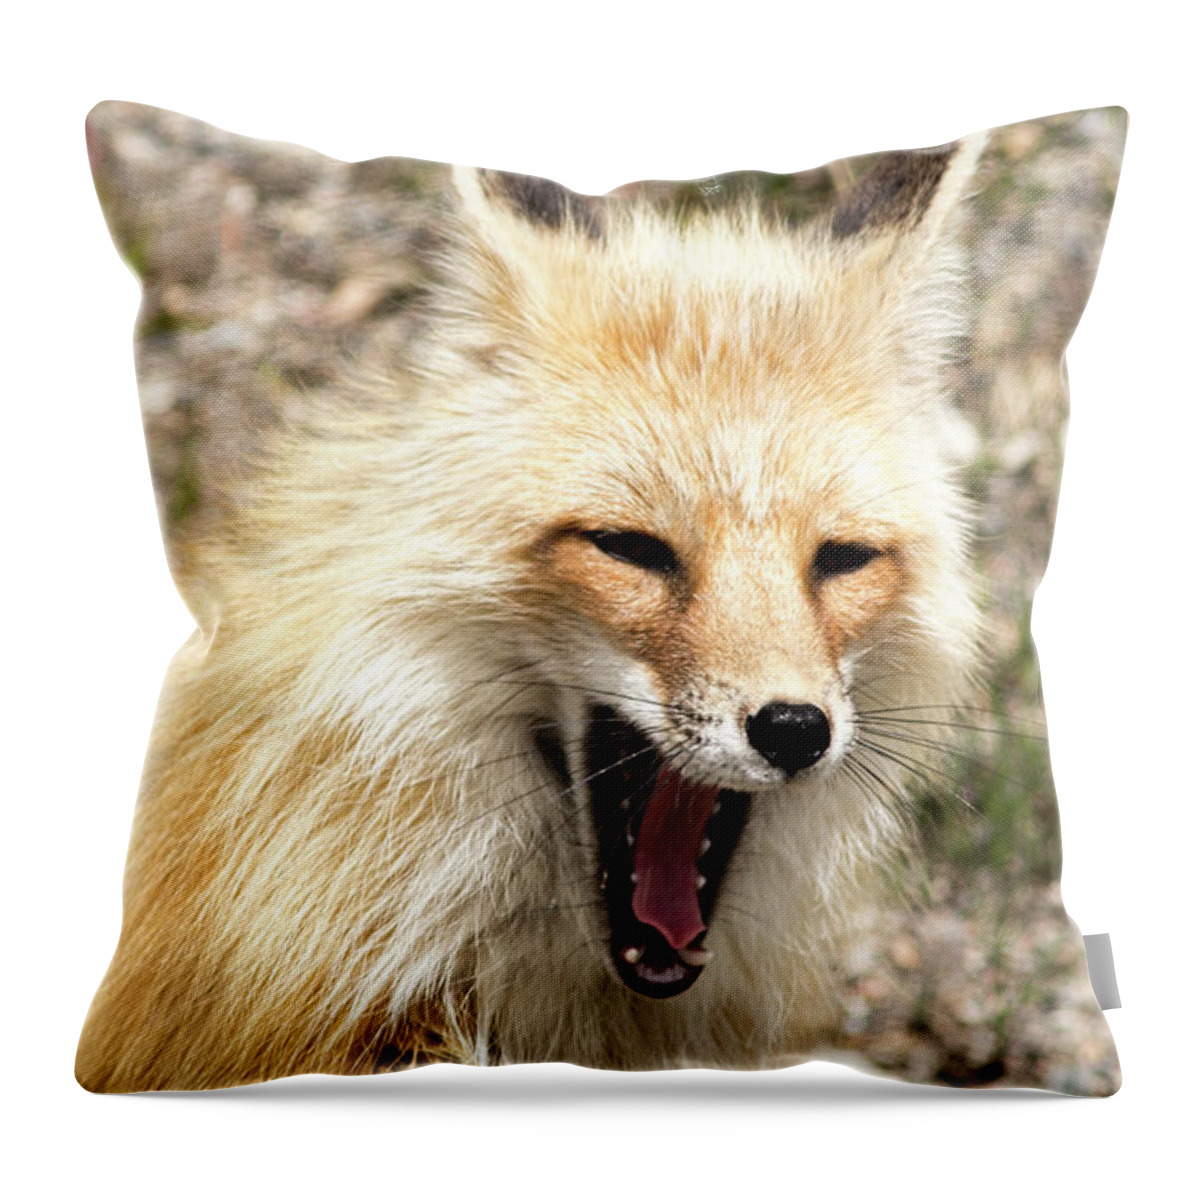 Fox Throw Pillow featuring the photograph Fox Yawn by Mark Harrington